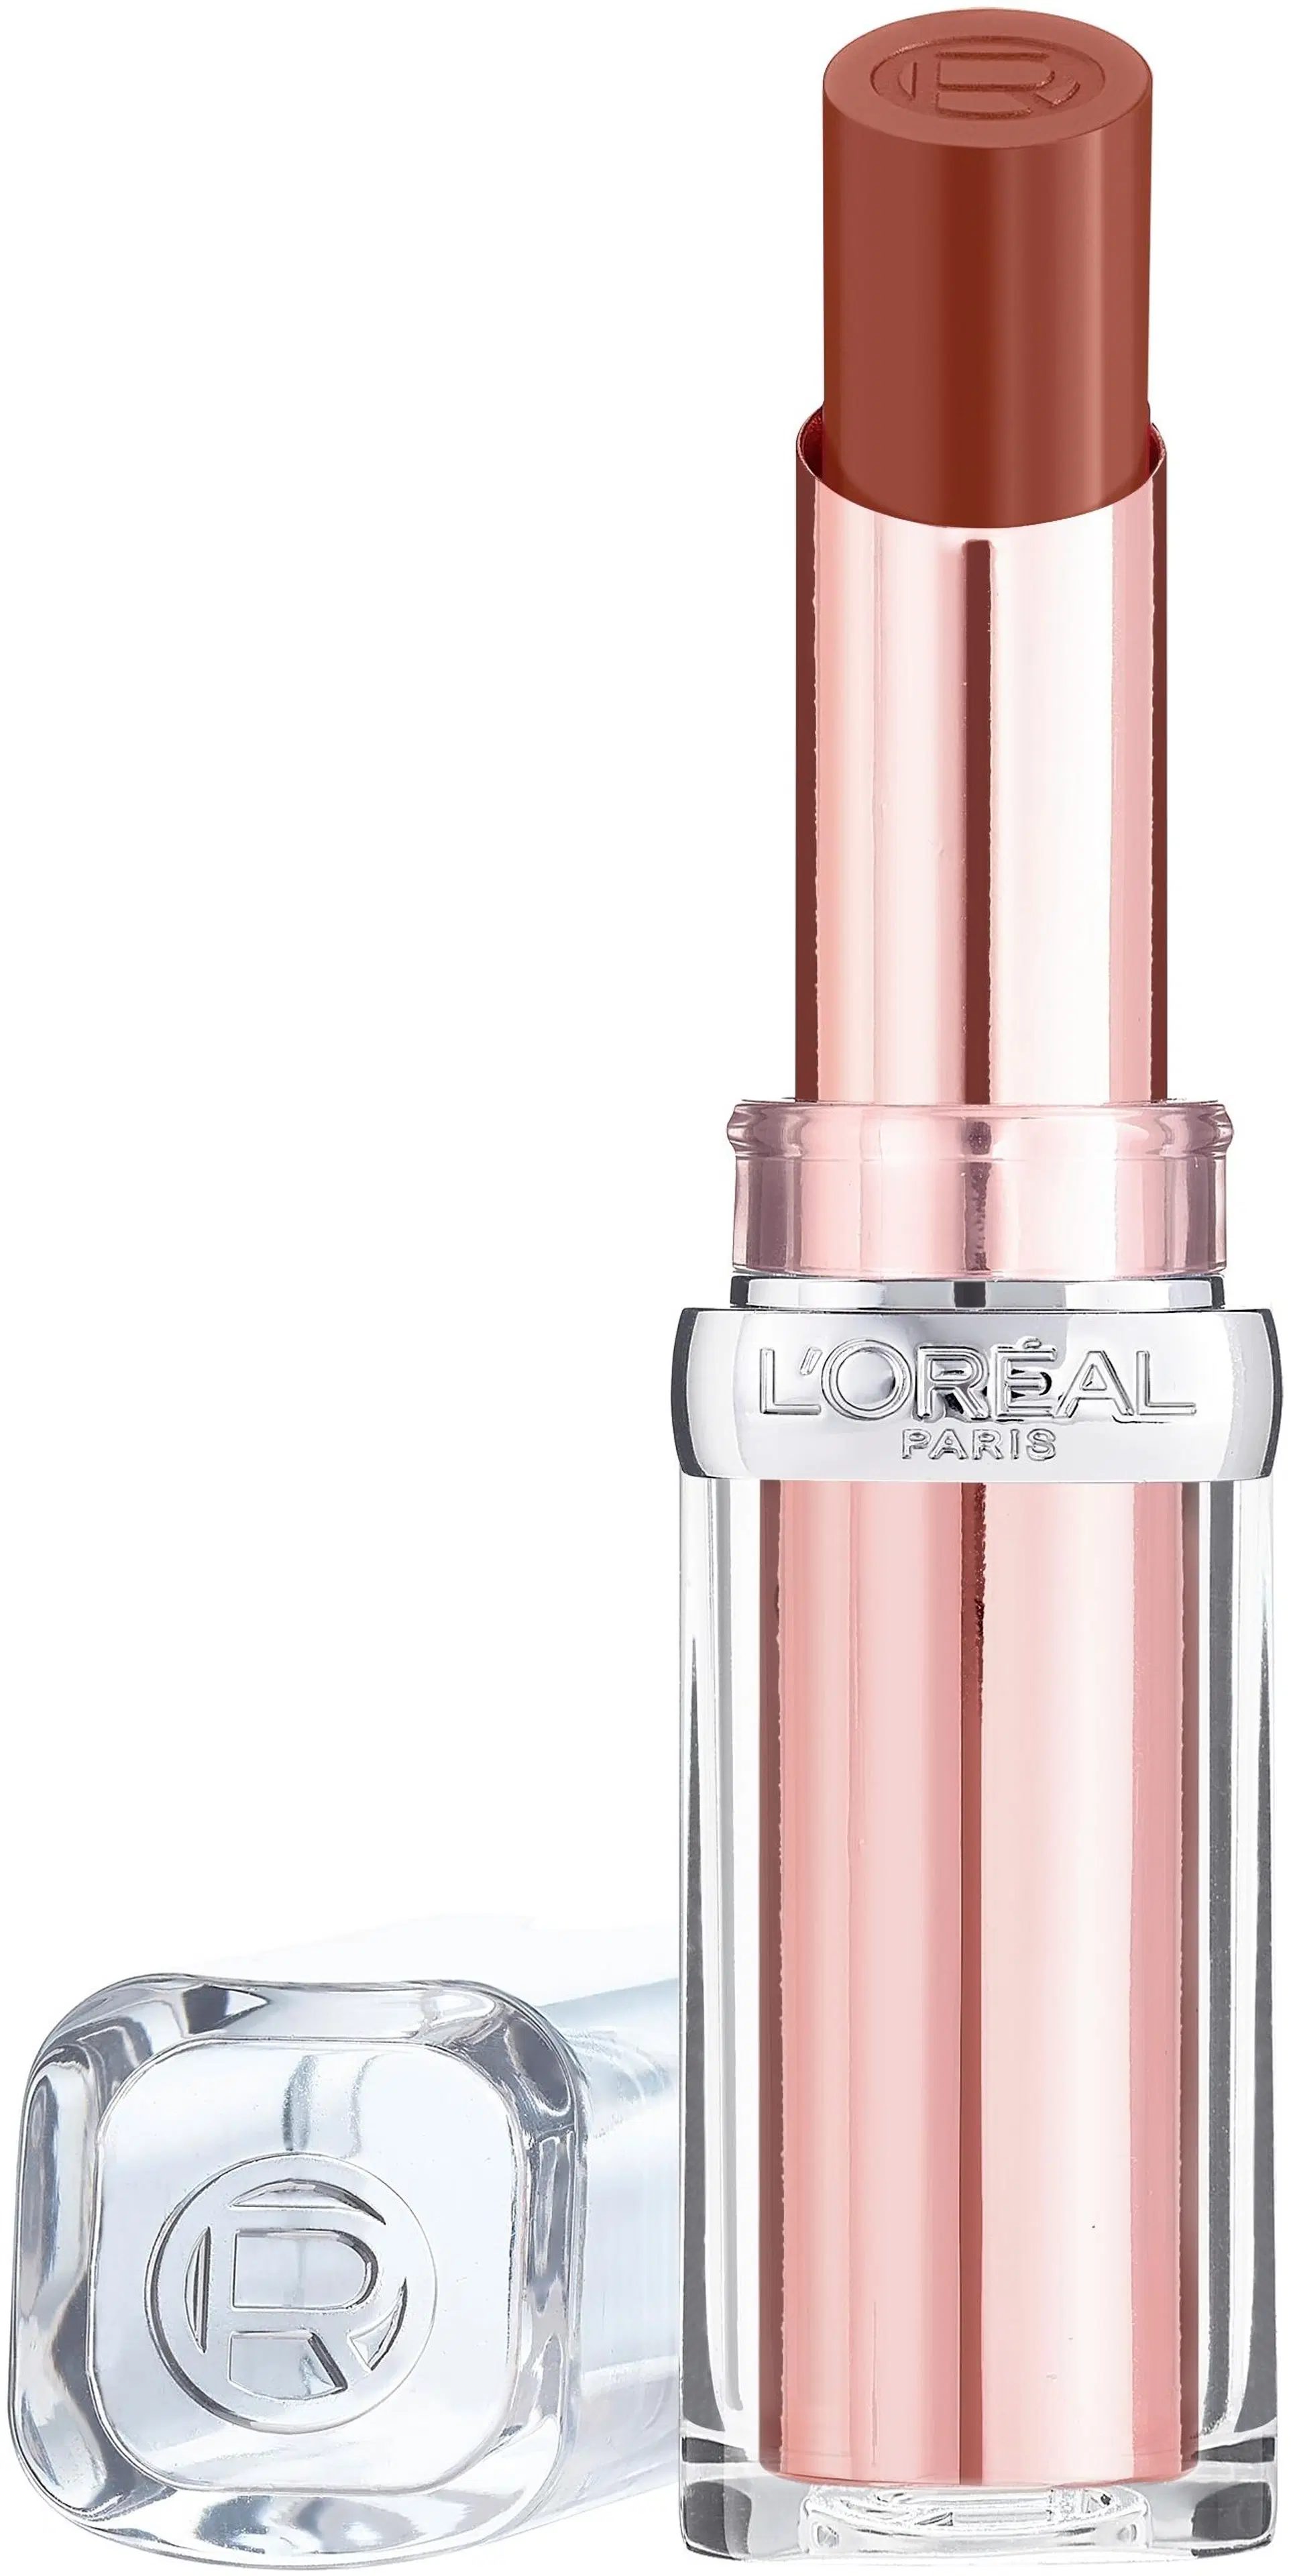 L'Oréal Paris Glow Paradise Balm-in-Lipstick huulipuna 3,8 g